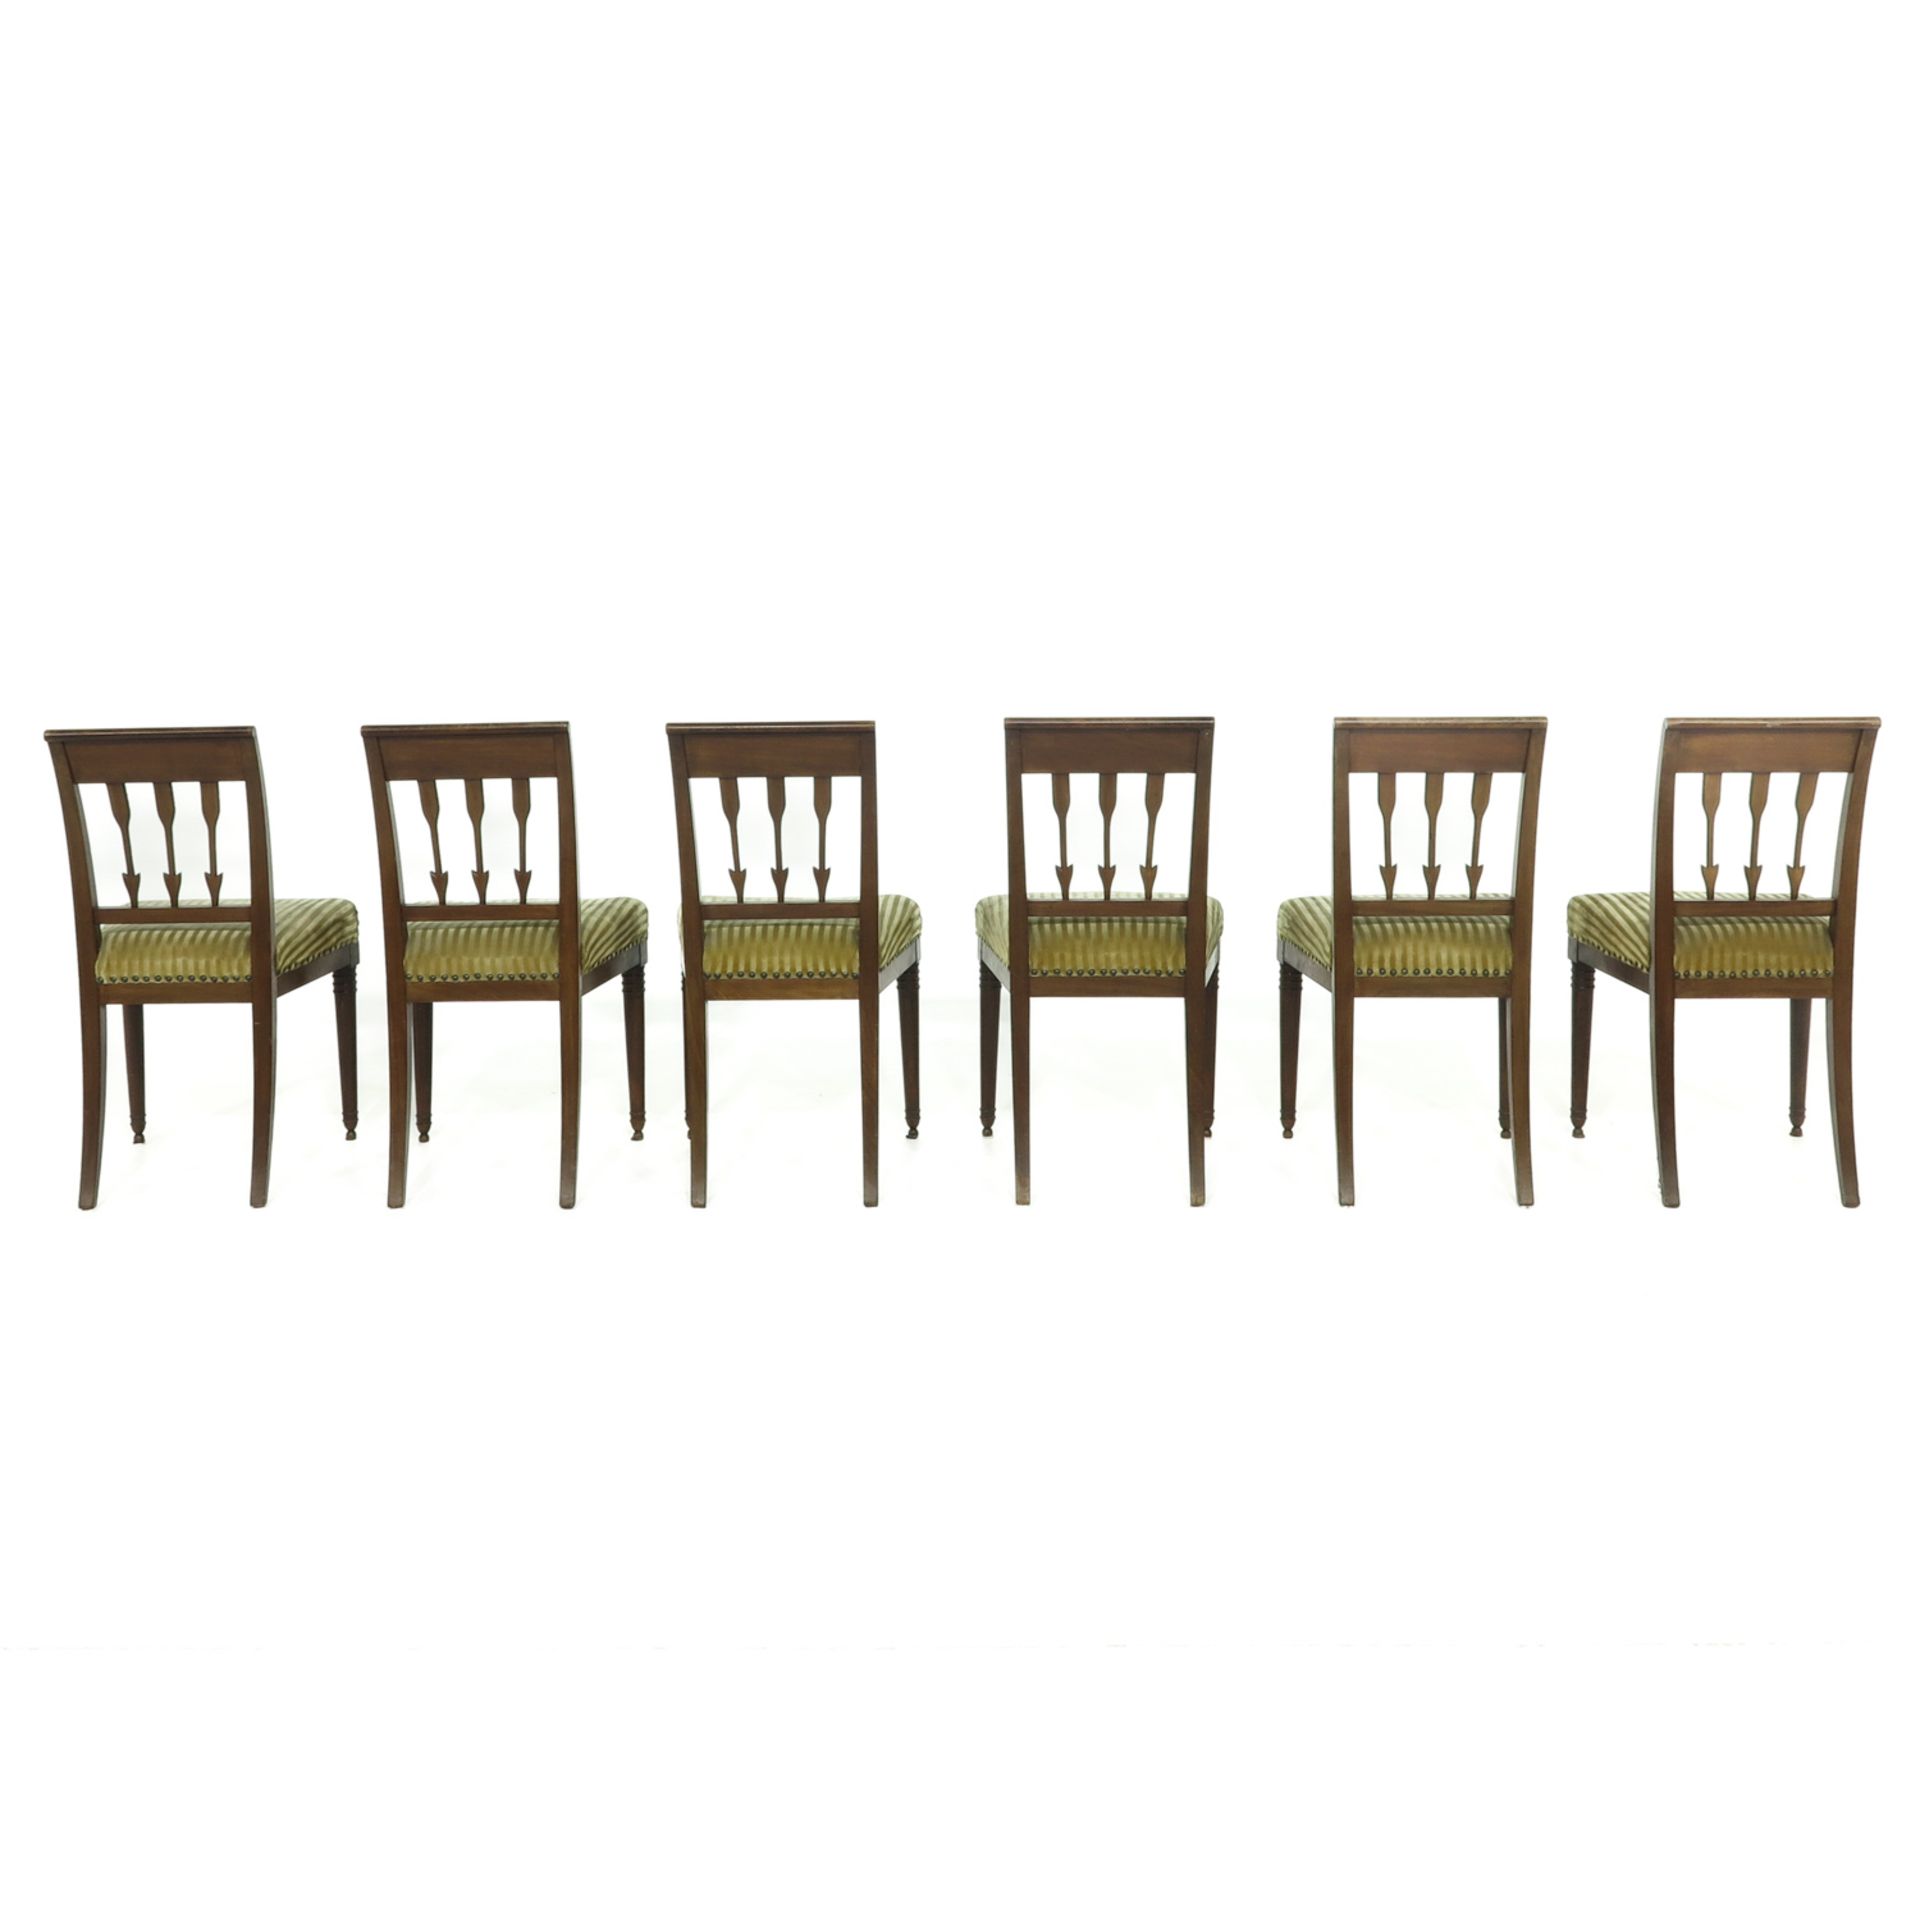 An English Table and Chair Set - Image 8 of 10